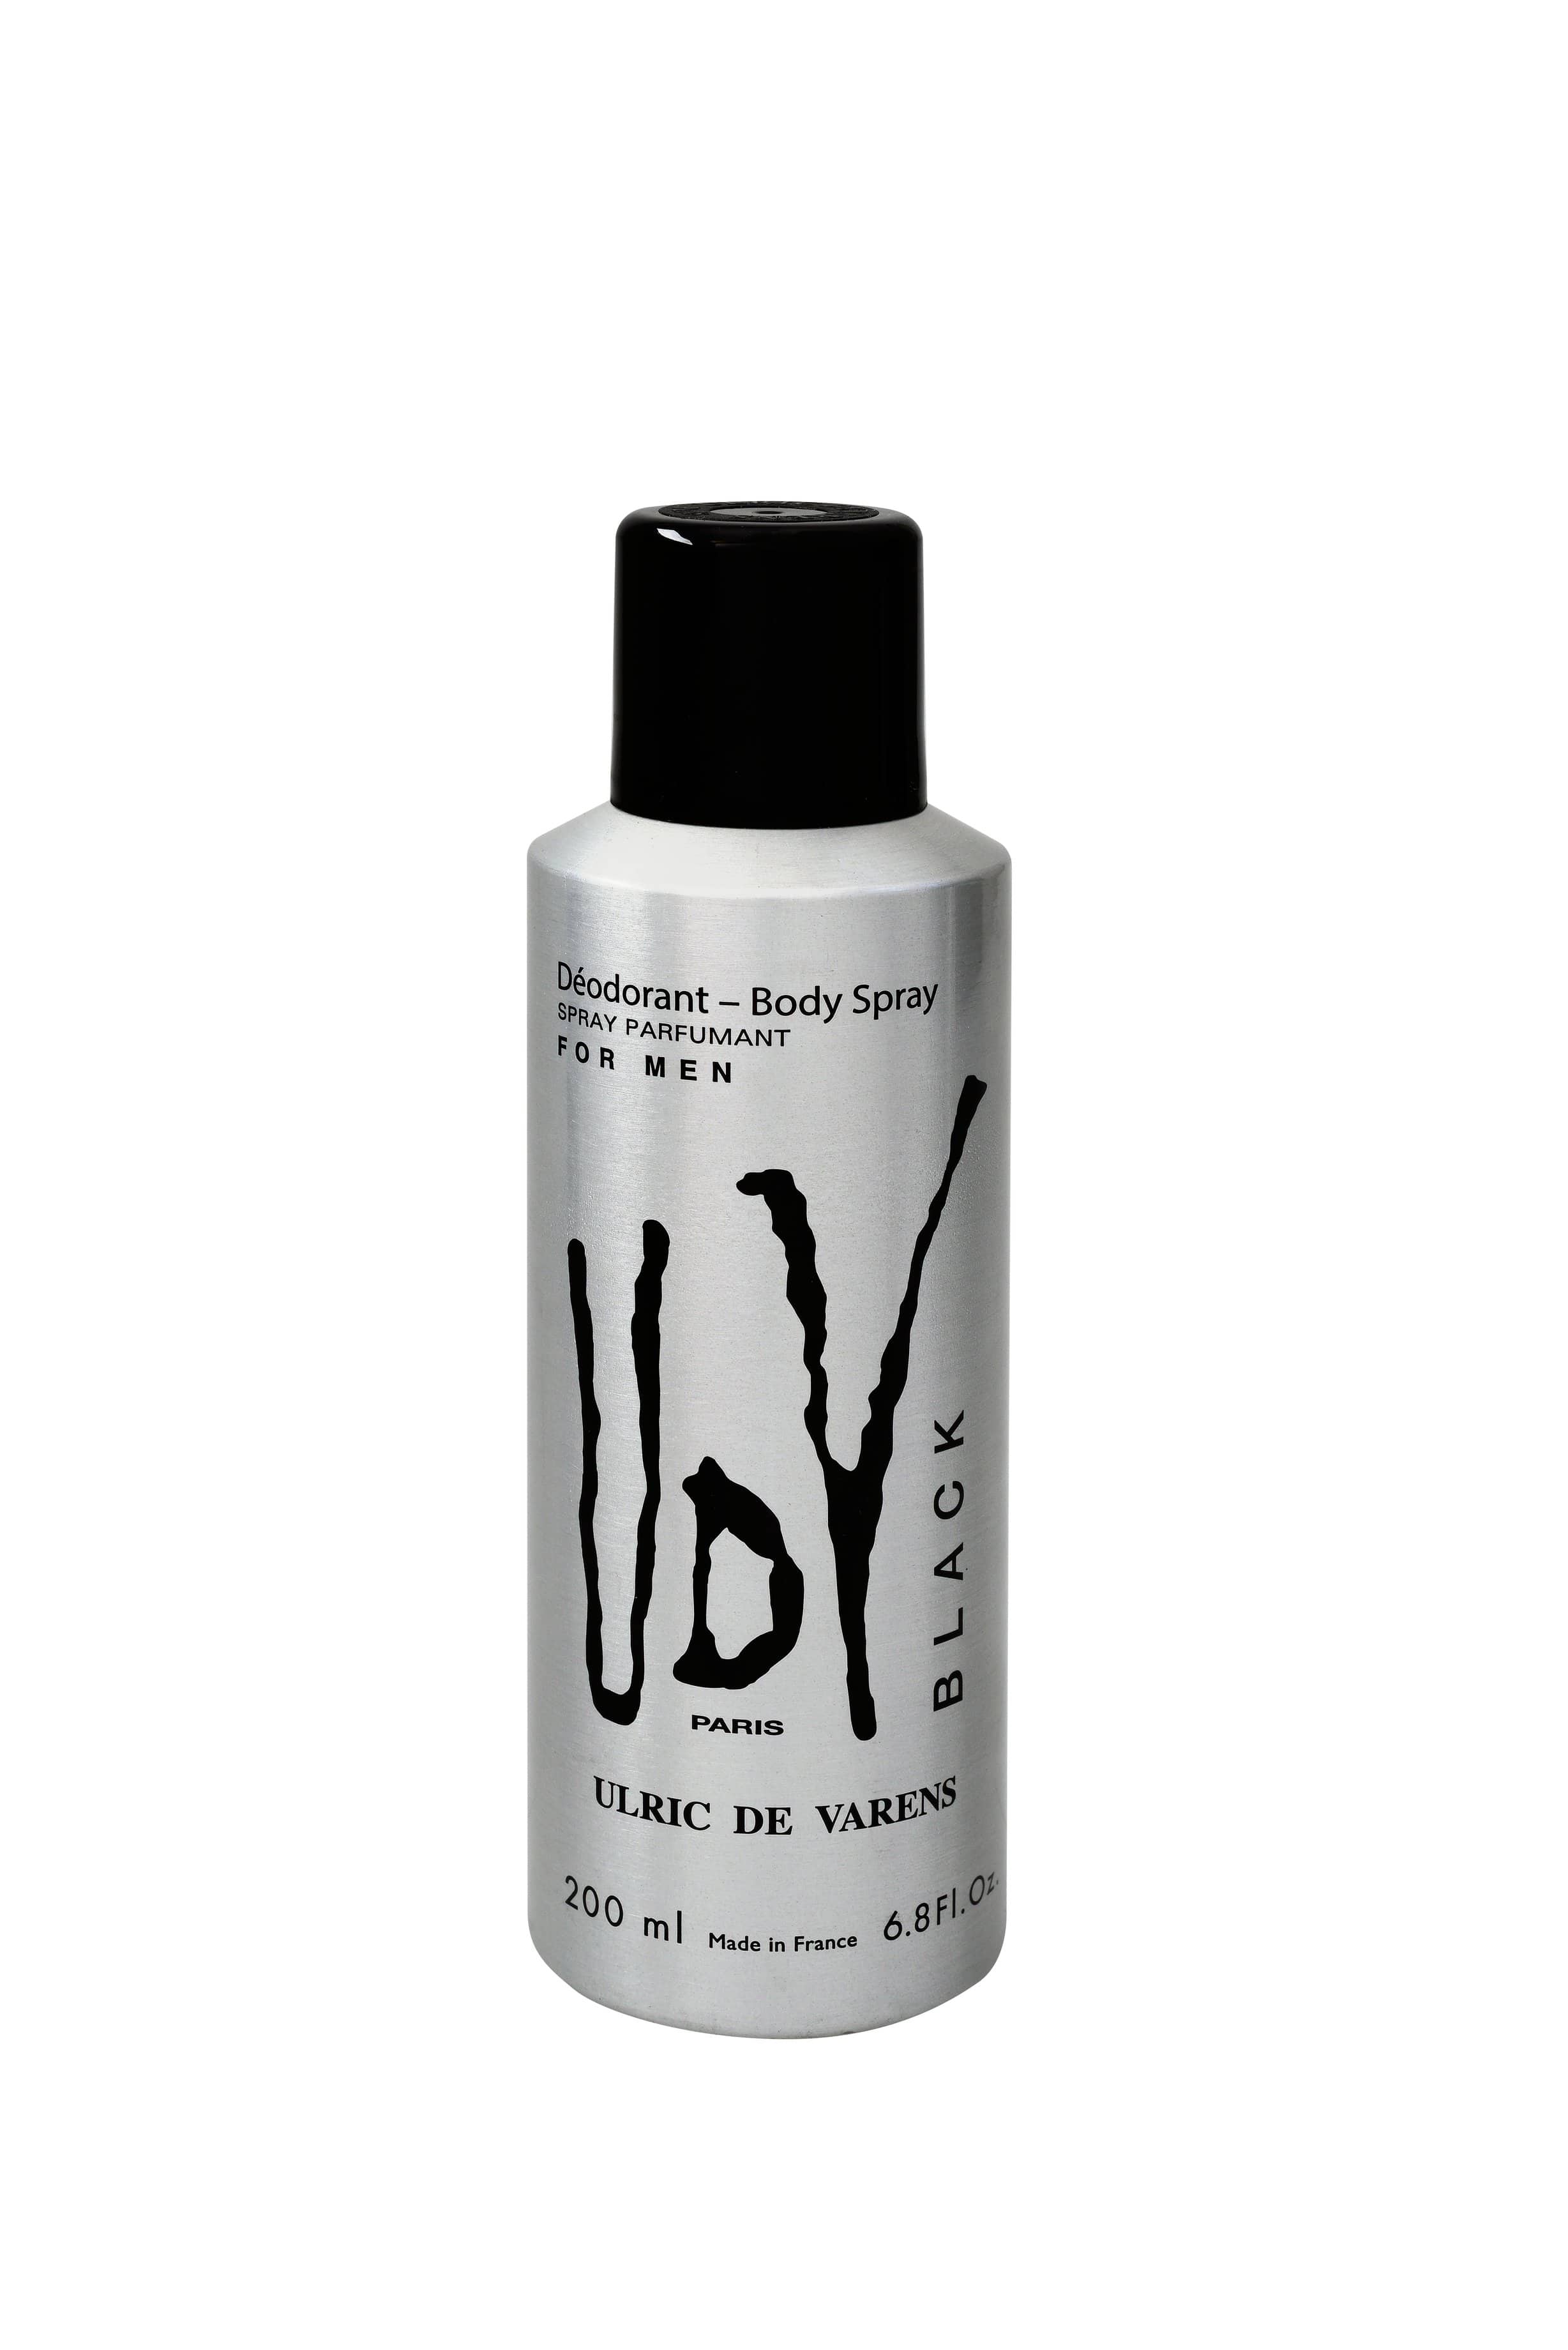 ULRIC DE VARENS Black Deodorant body spray 200 mlUDV3537 - Jashanmal Home